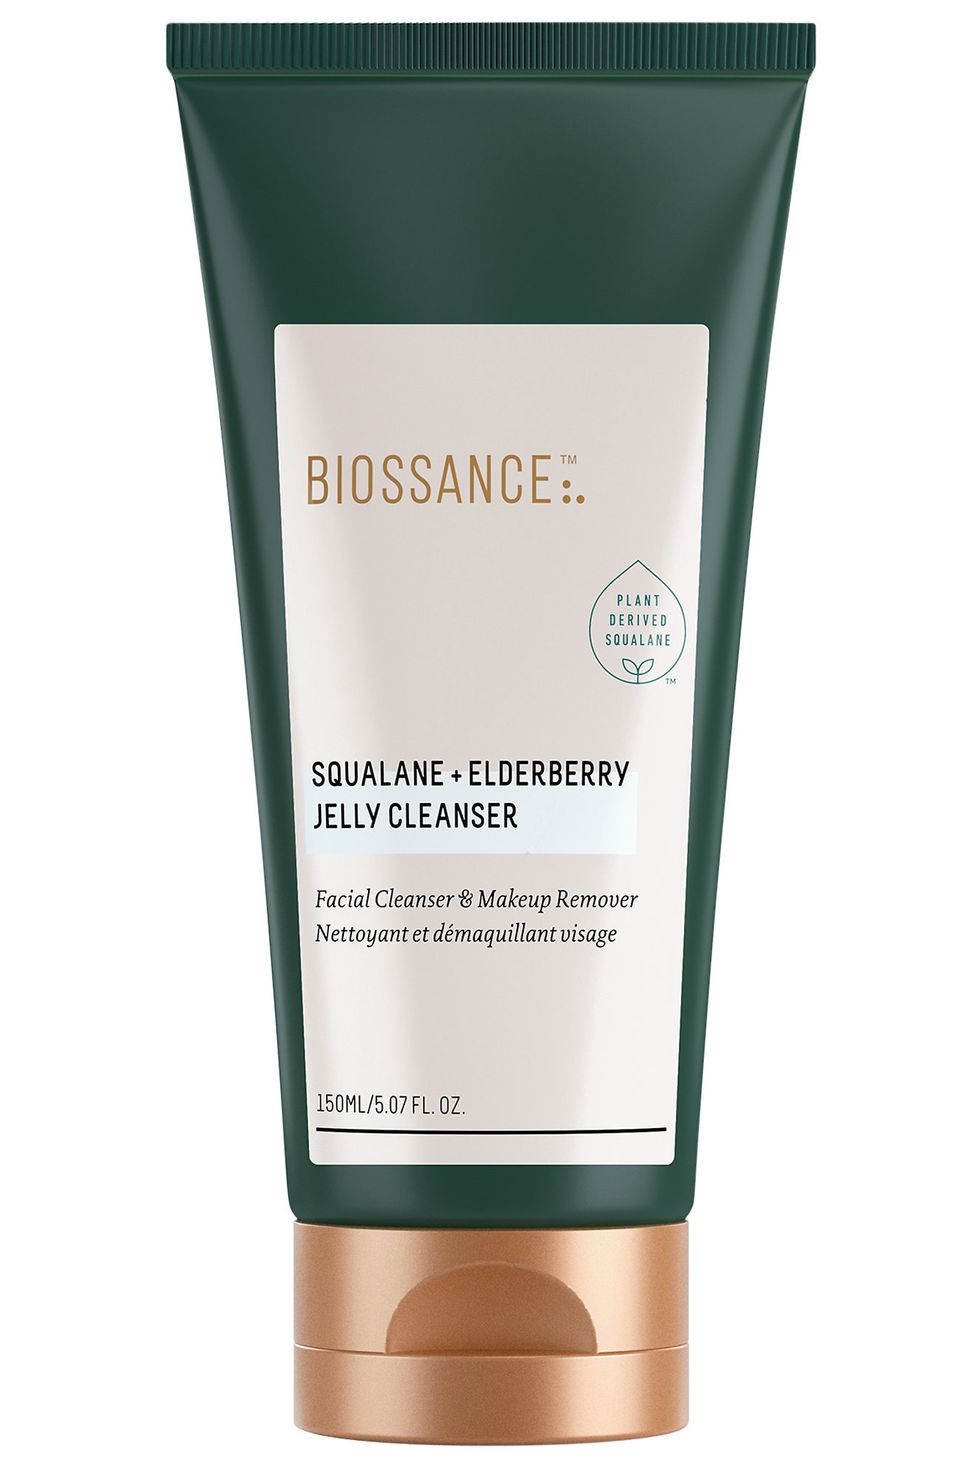 Squalane + Elderberry Jelly Cleanser